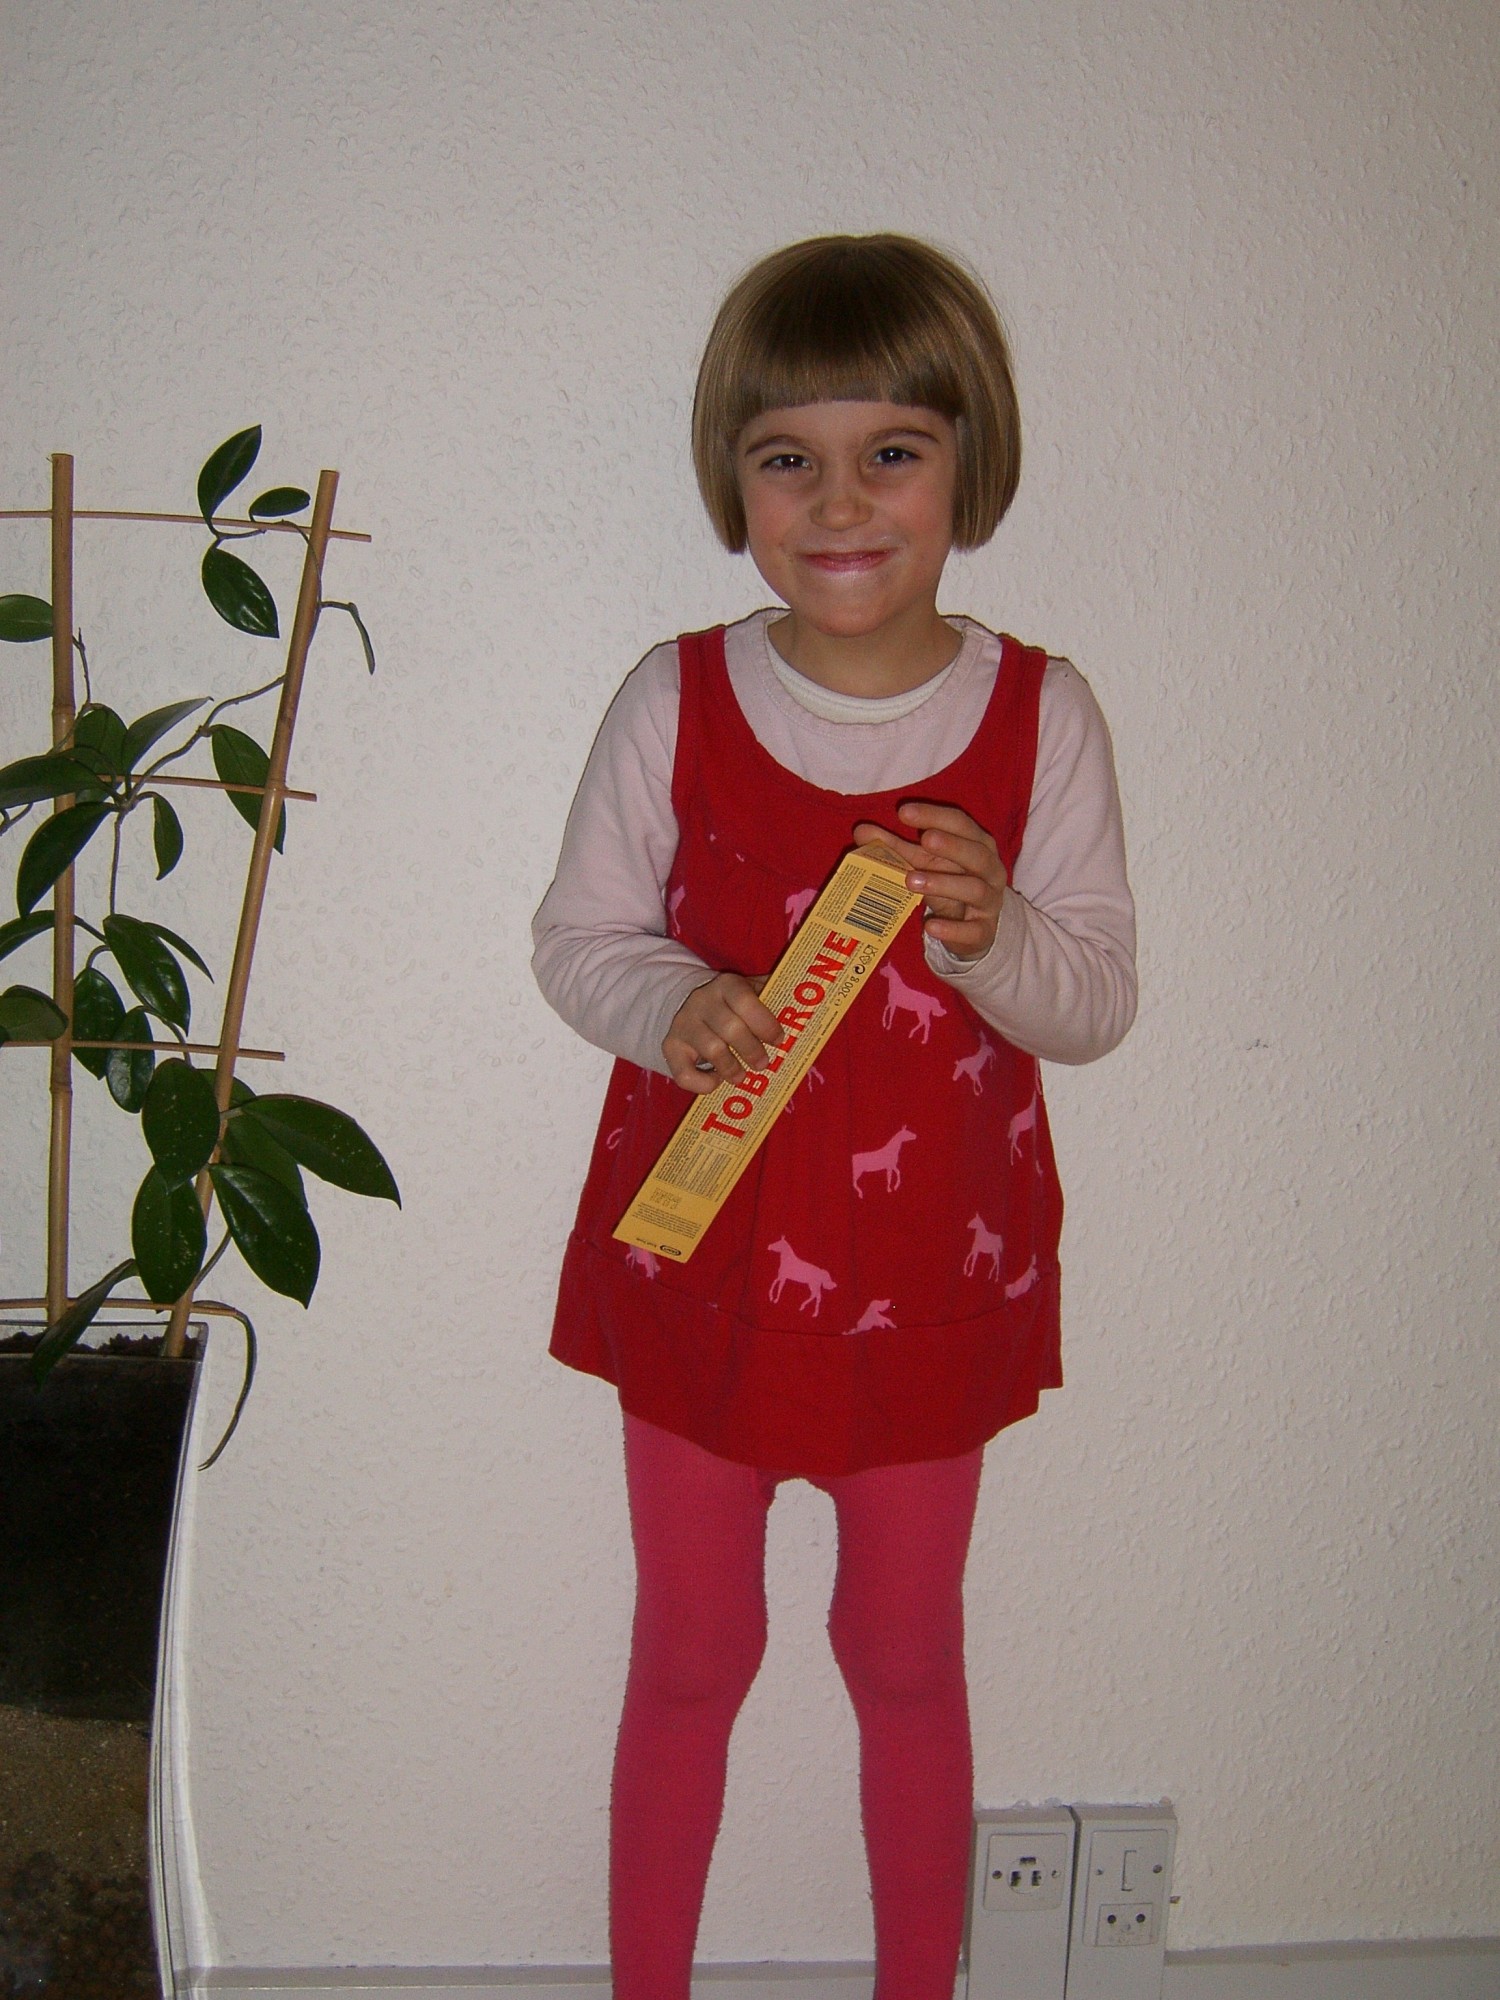 Marikkas 6. Toblerone billede. (5 år)